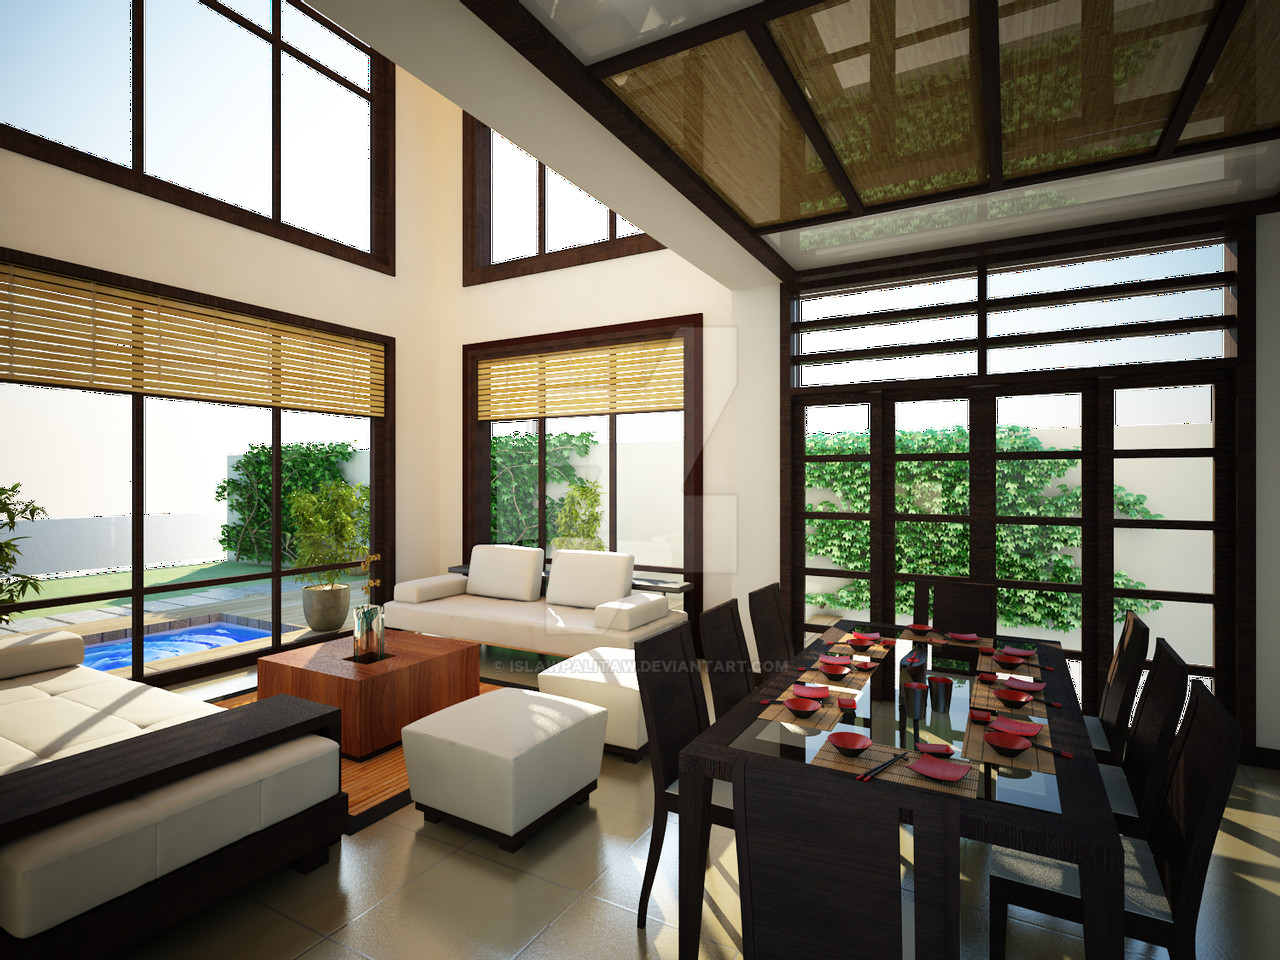 Japanese Living Room Ideas
 Japanese Inspired Living Room by islawpalitaw on DeviantArt